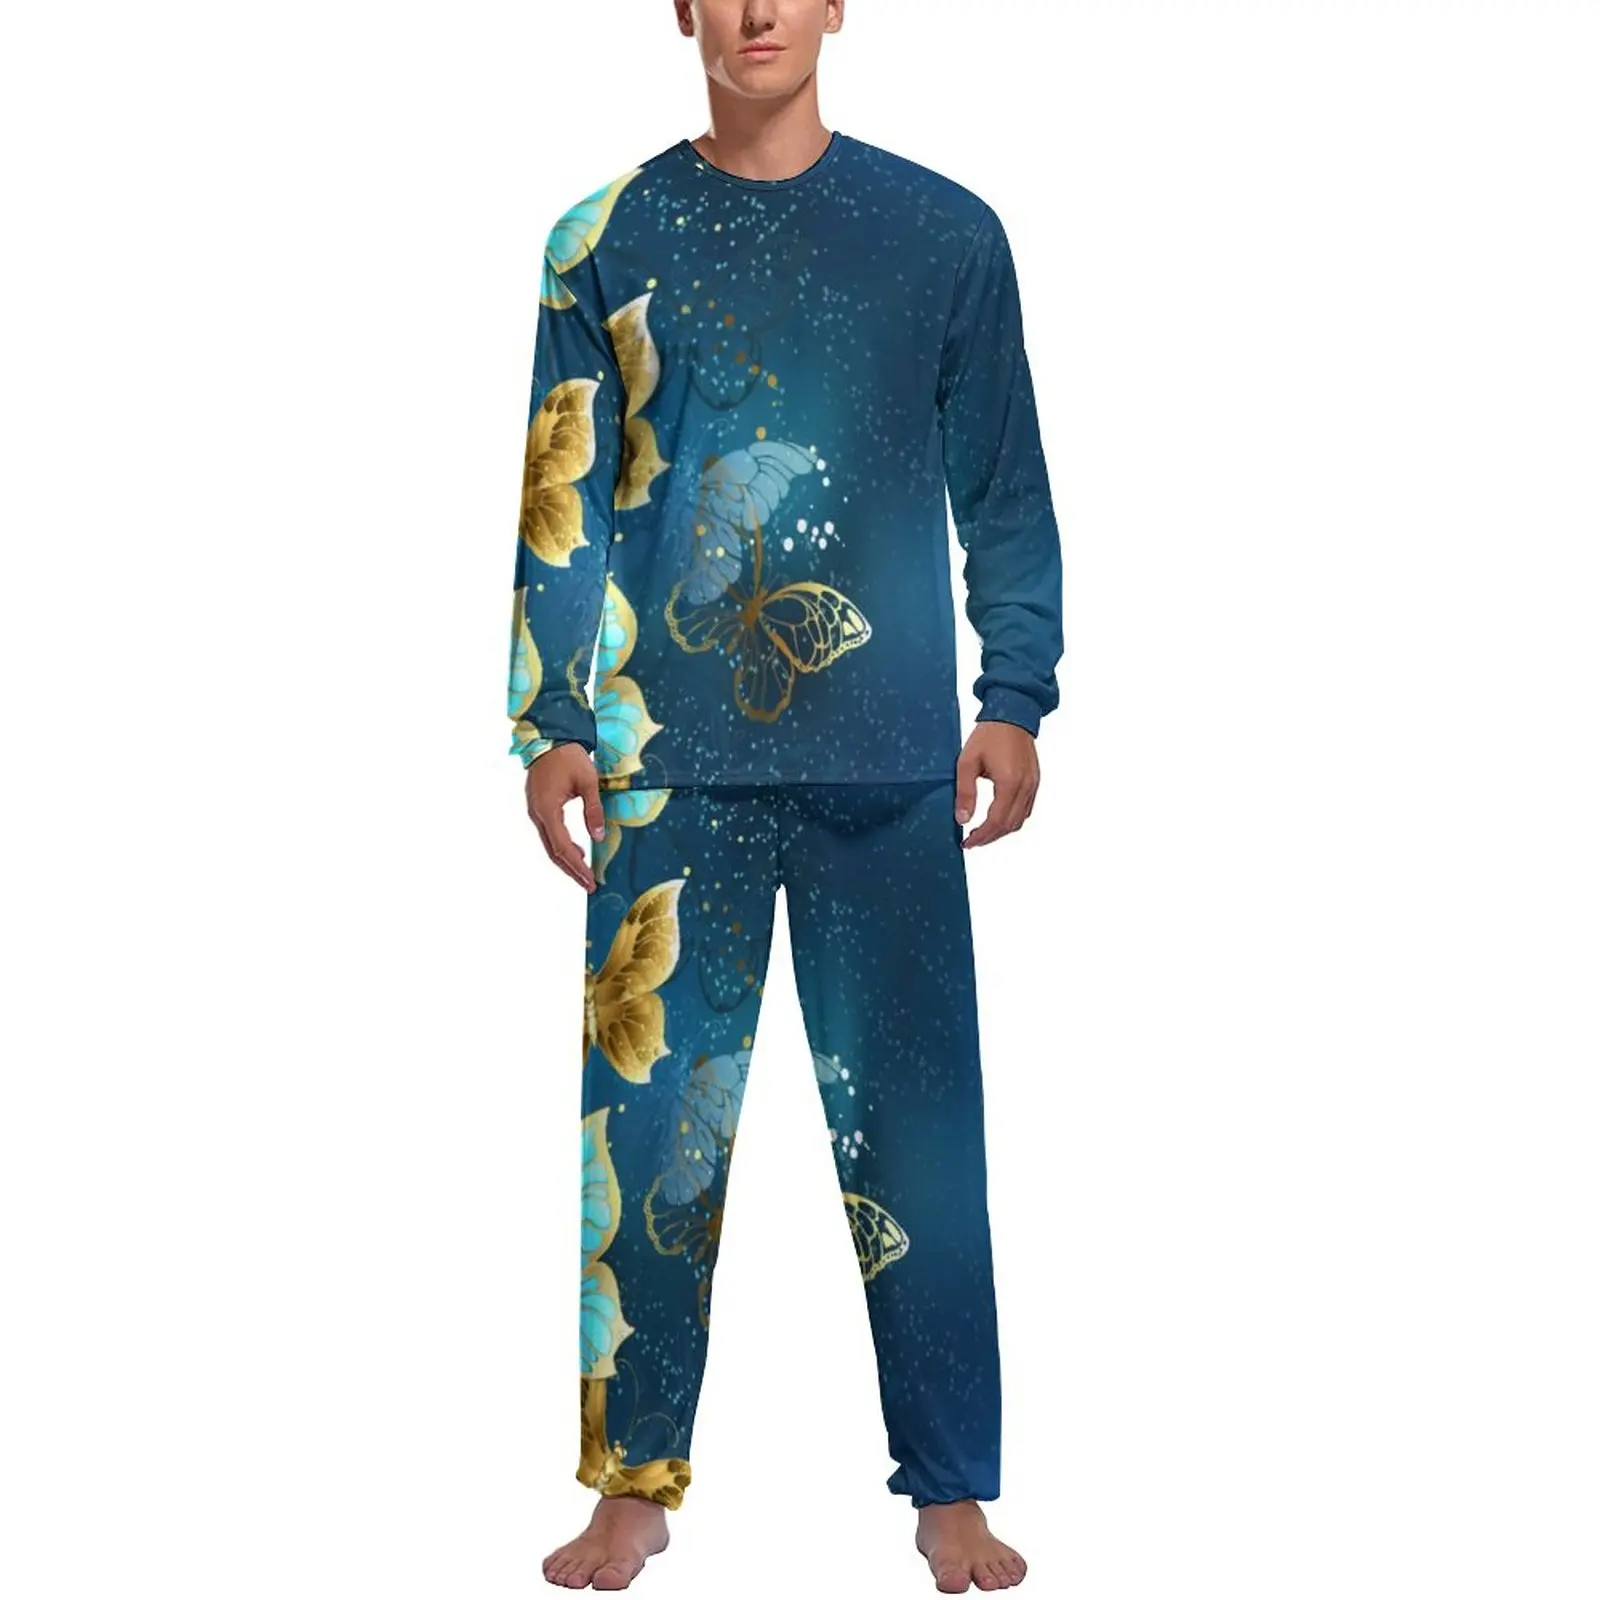 Retro Steampunk Pajamas Golden Butterflies Men Long Sleeve Cute Pajama Sets 2 Pieces Night Spring Design Nightwear Gift